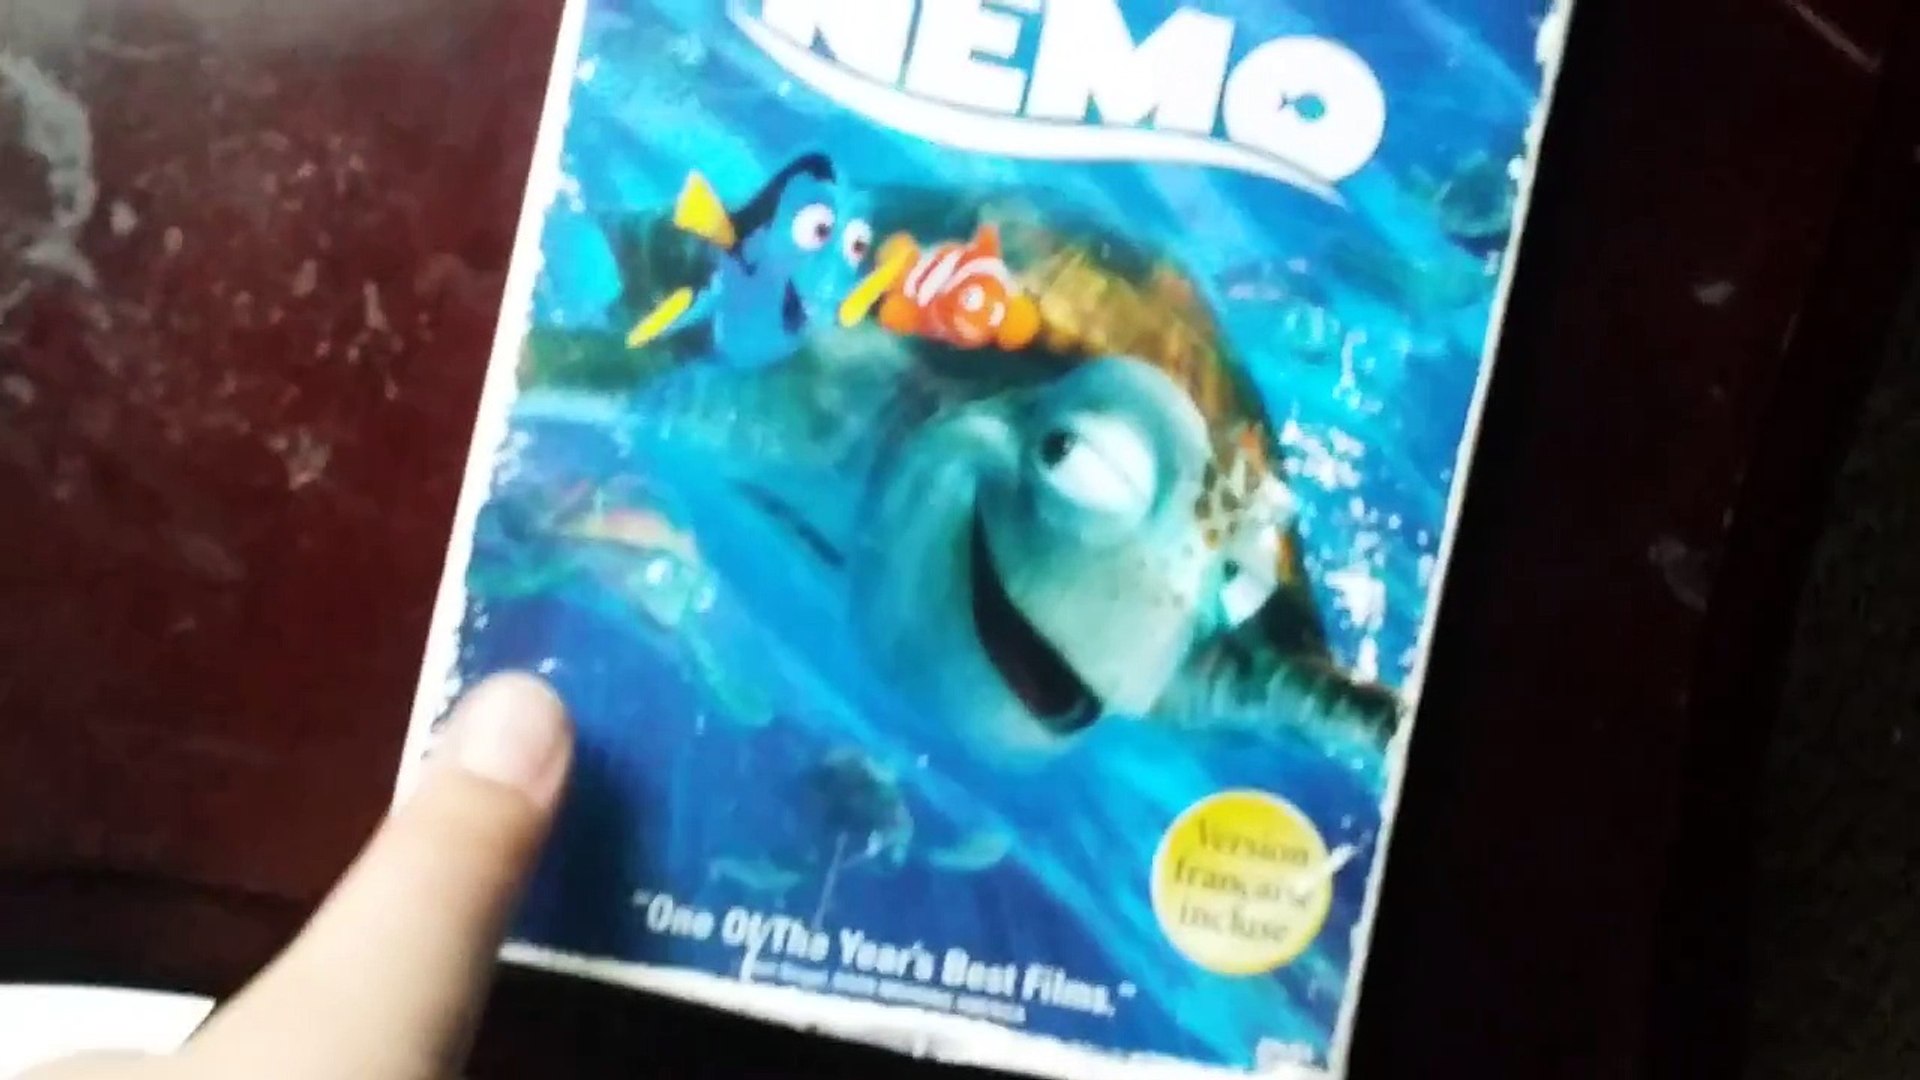 Vaticinador Recordar marrón Opening to Finding Nemo 2003 DVD (Disc 1) - video Dailymotion